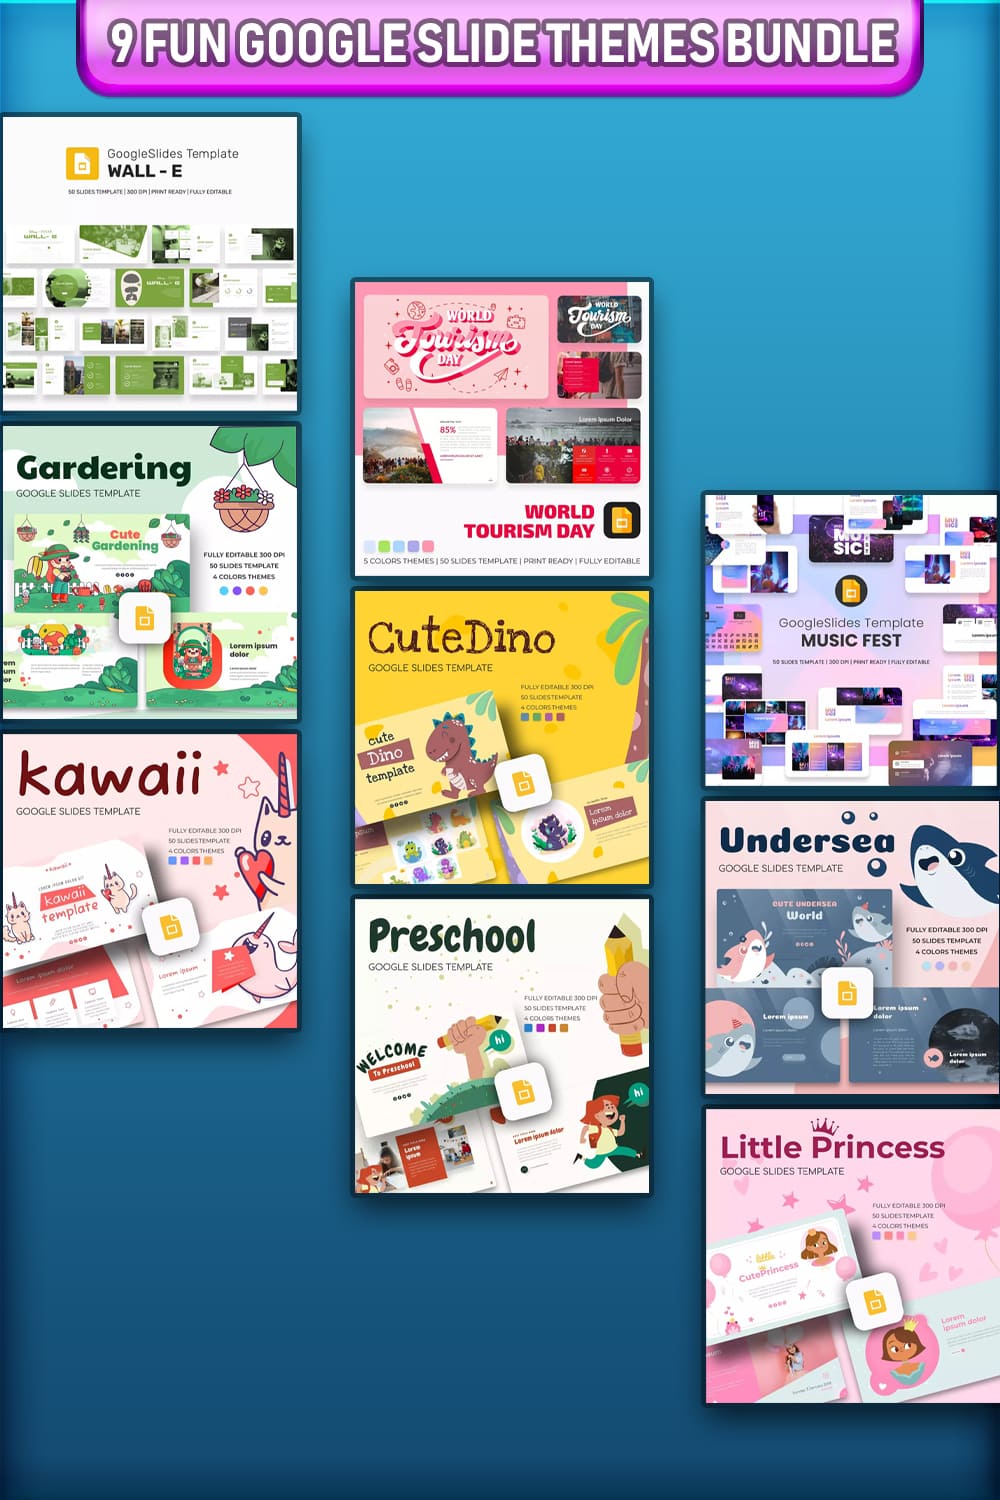 9 Fun Google Slide Themes Bundle Pinterest.